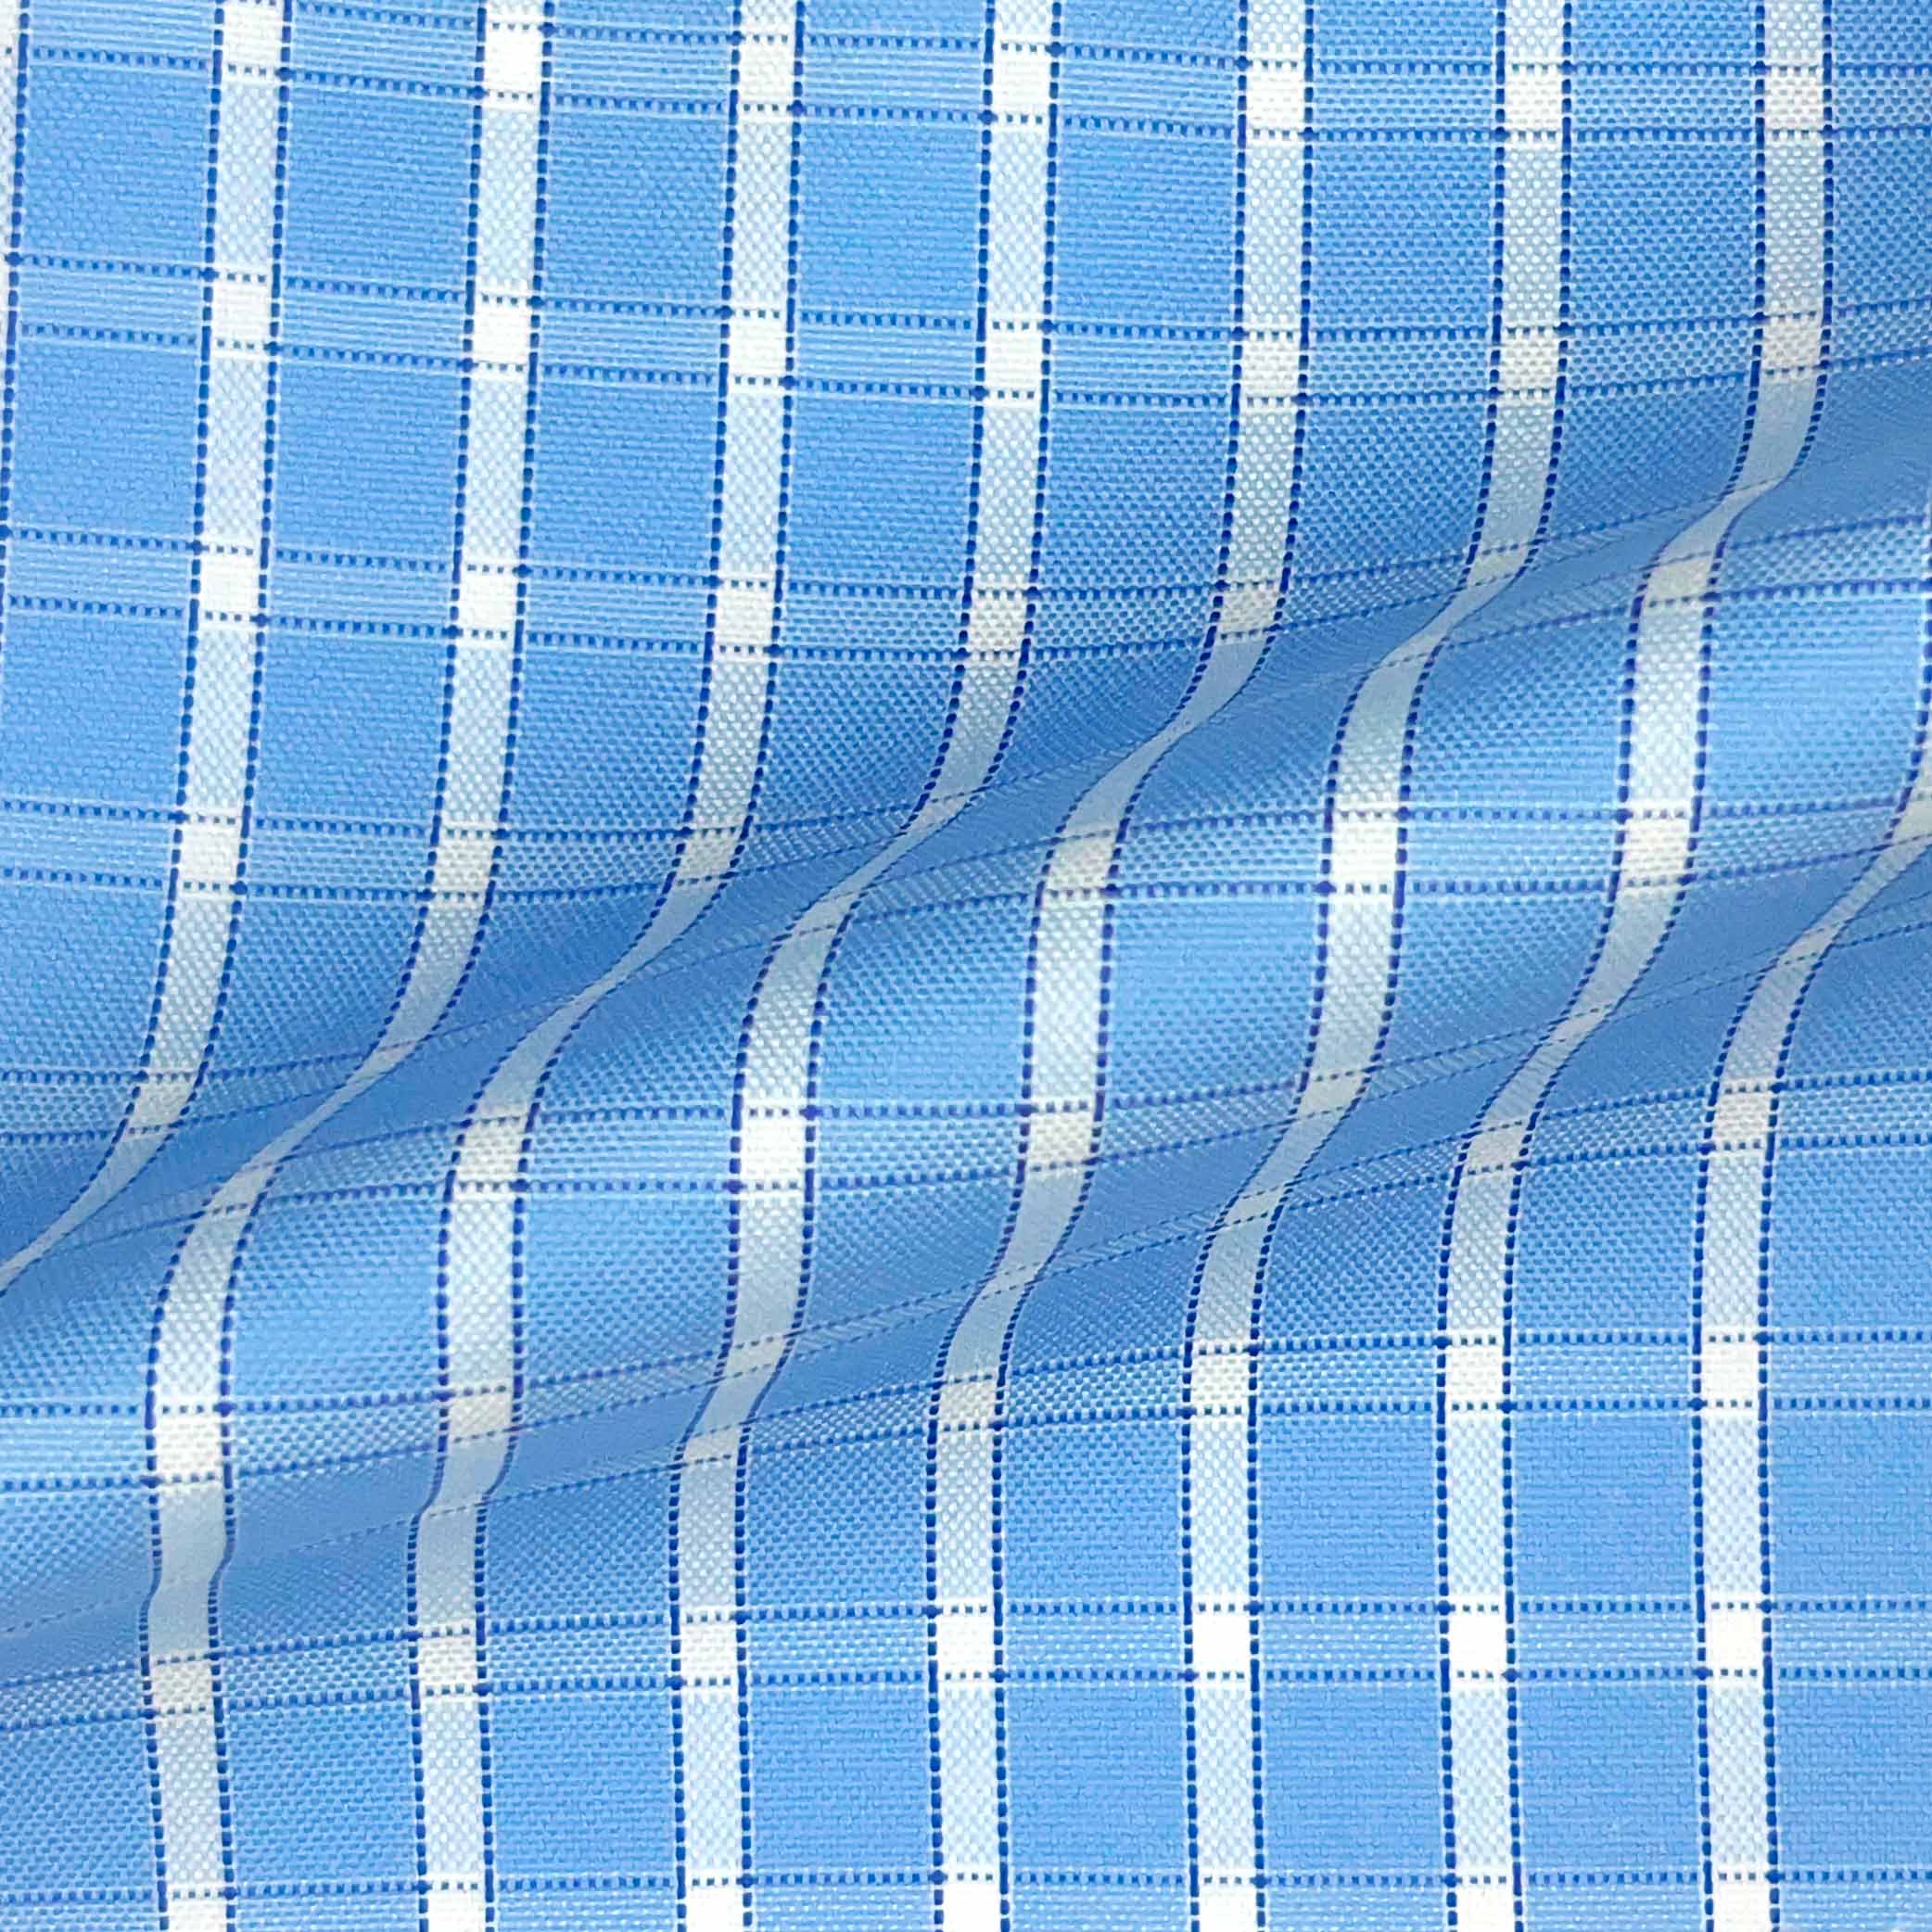 Baby Blue Grid Check Giza 45 Egyptian Cotton Dress Shirt Cloth